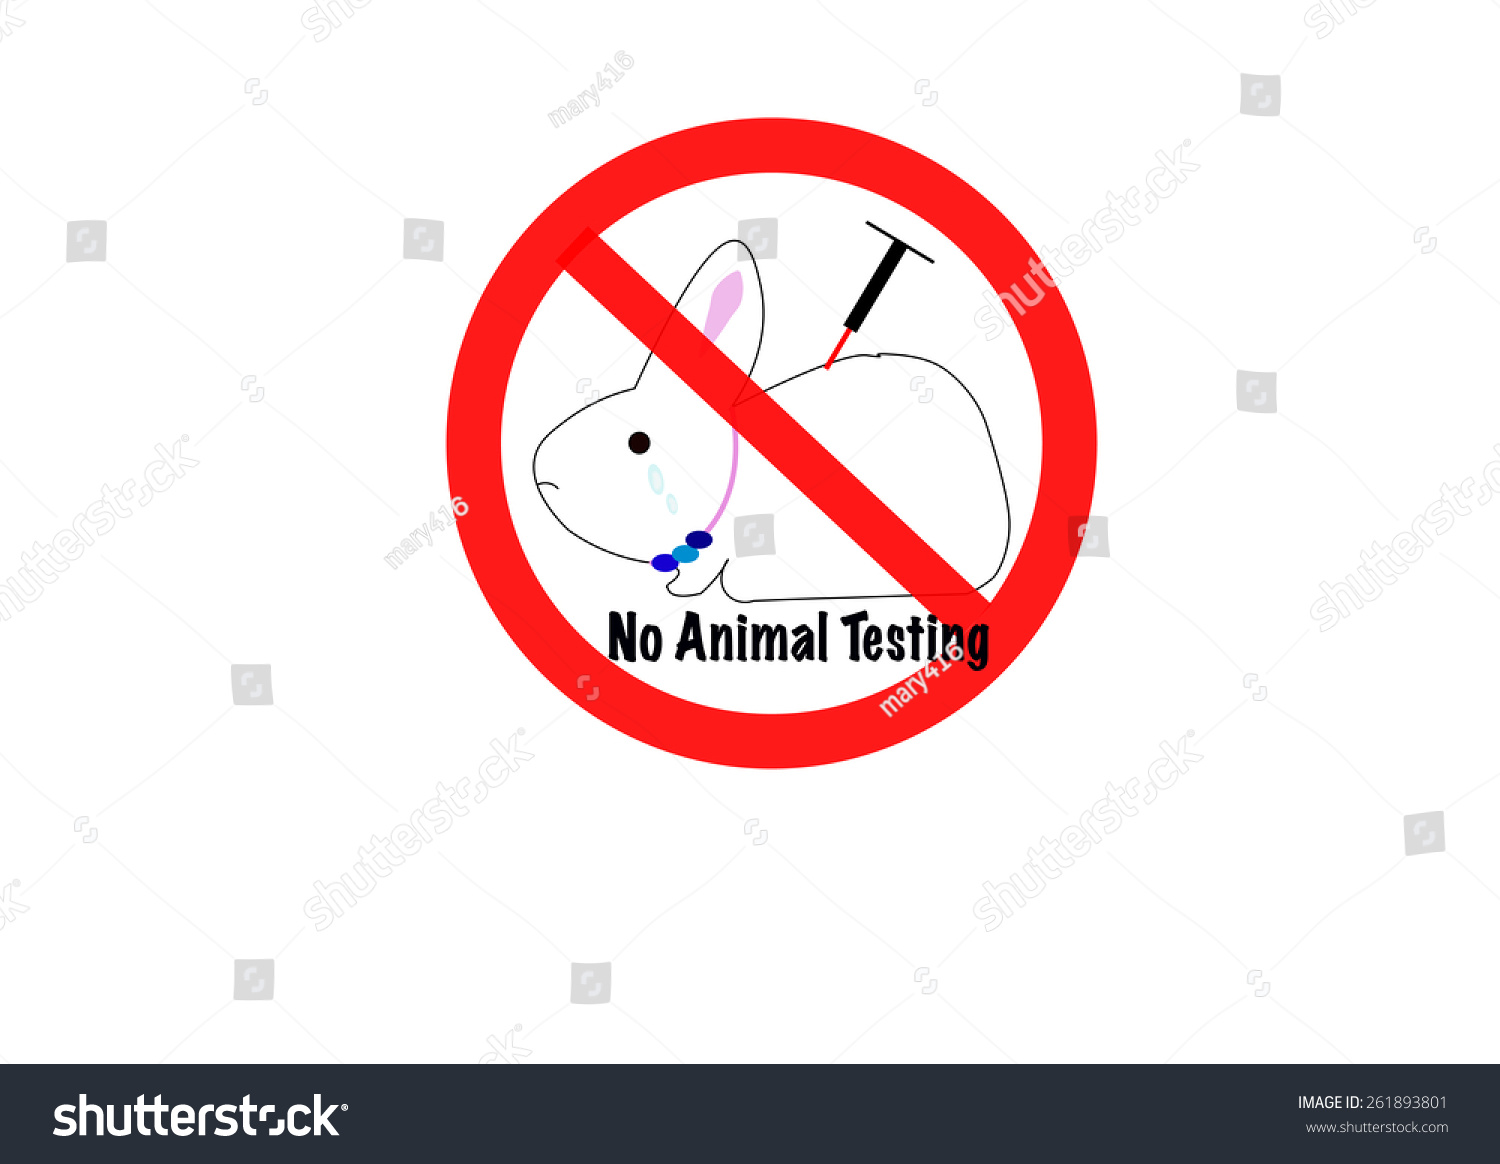 No Animal Testing Sign Icon Stock Vector Illustration 261893801